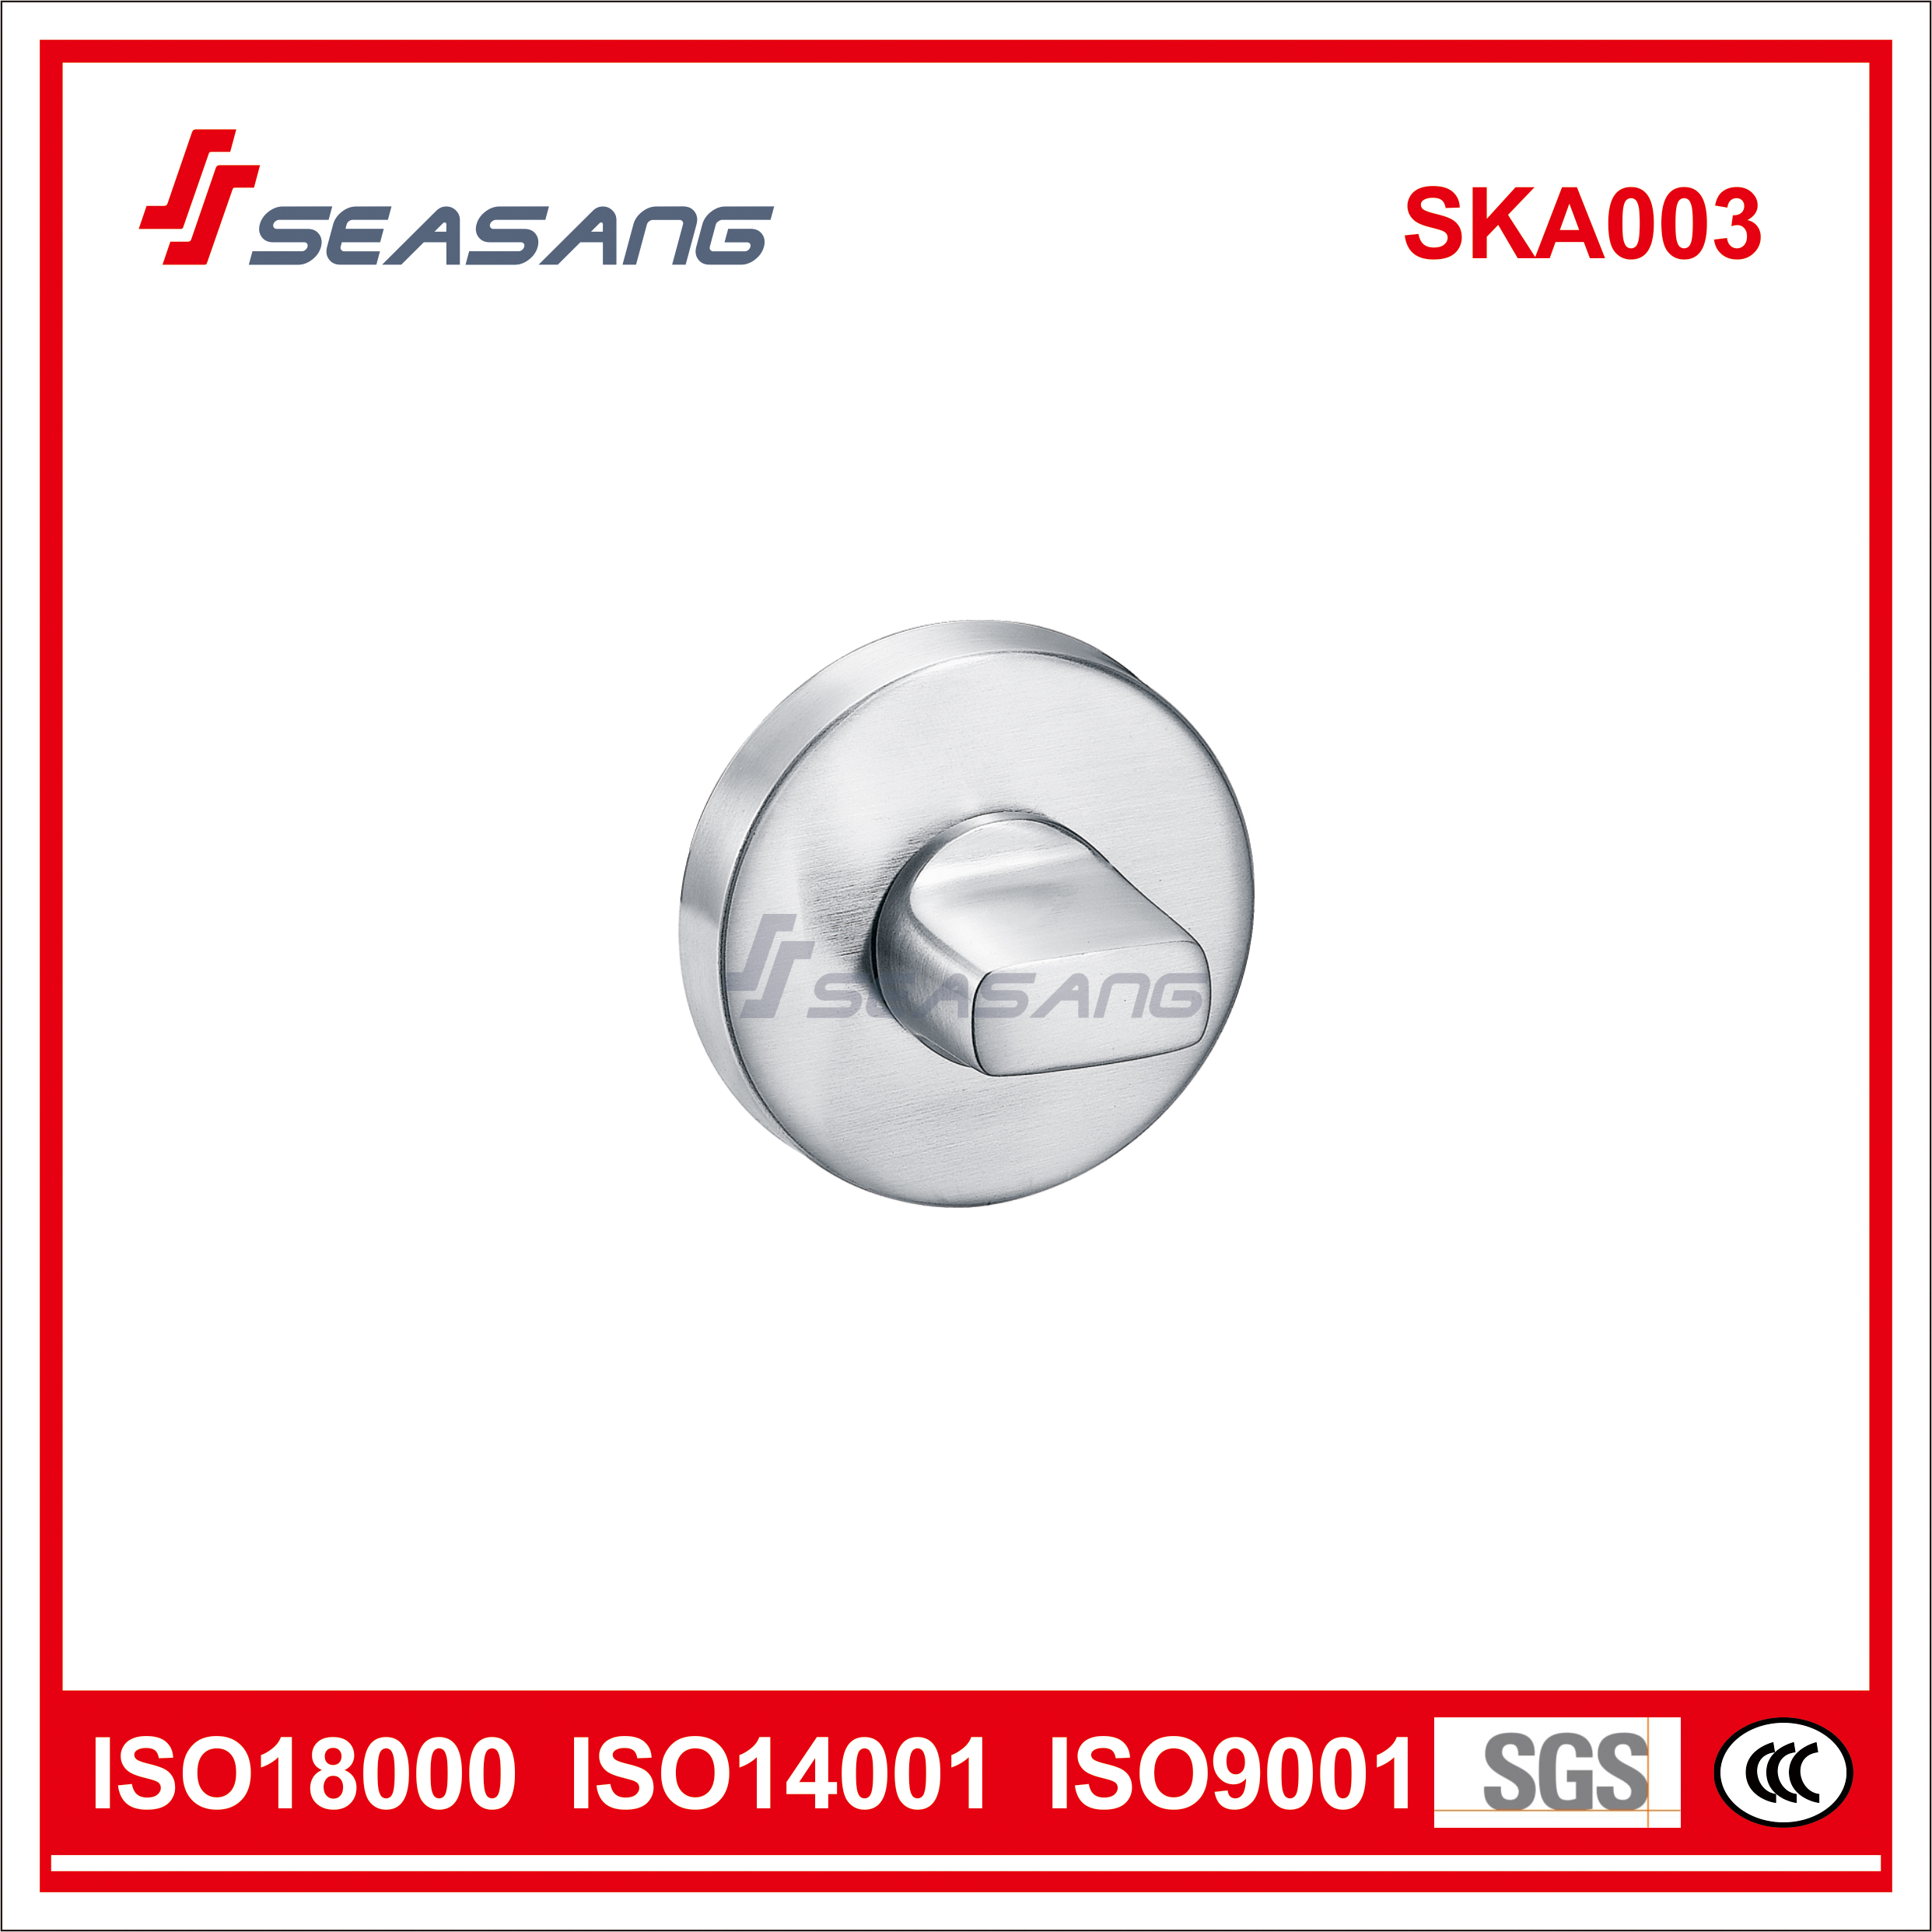 Stainless Steel Bathroom Handle Ska003